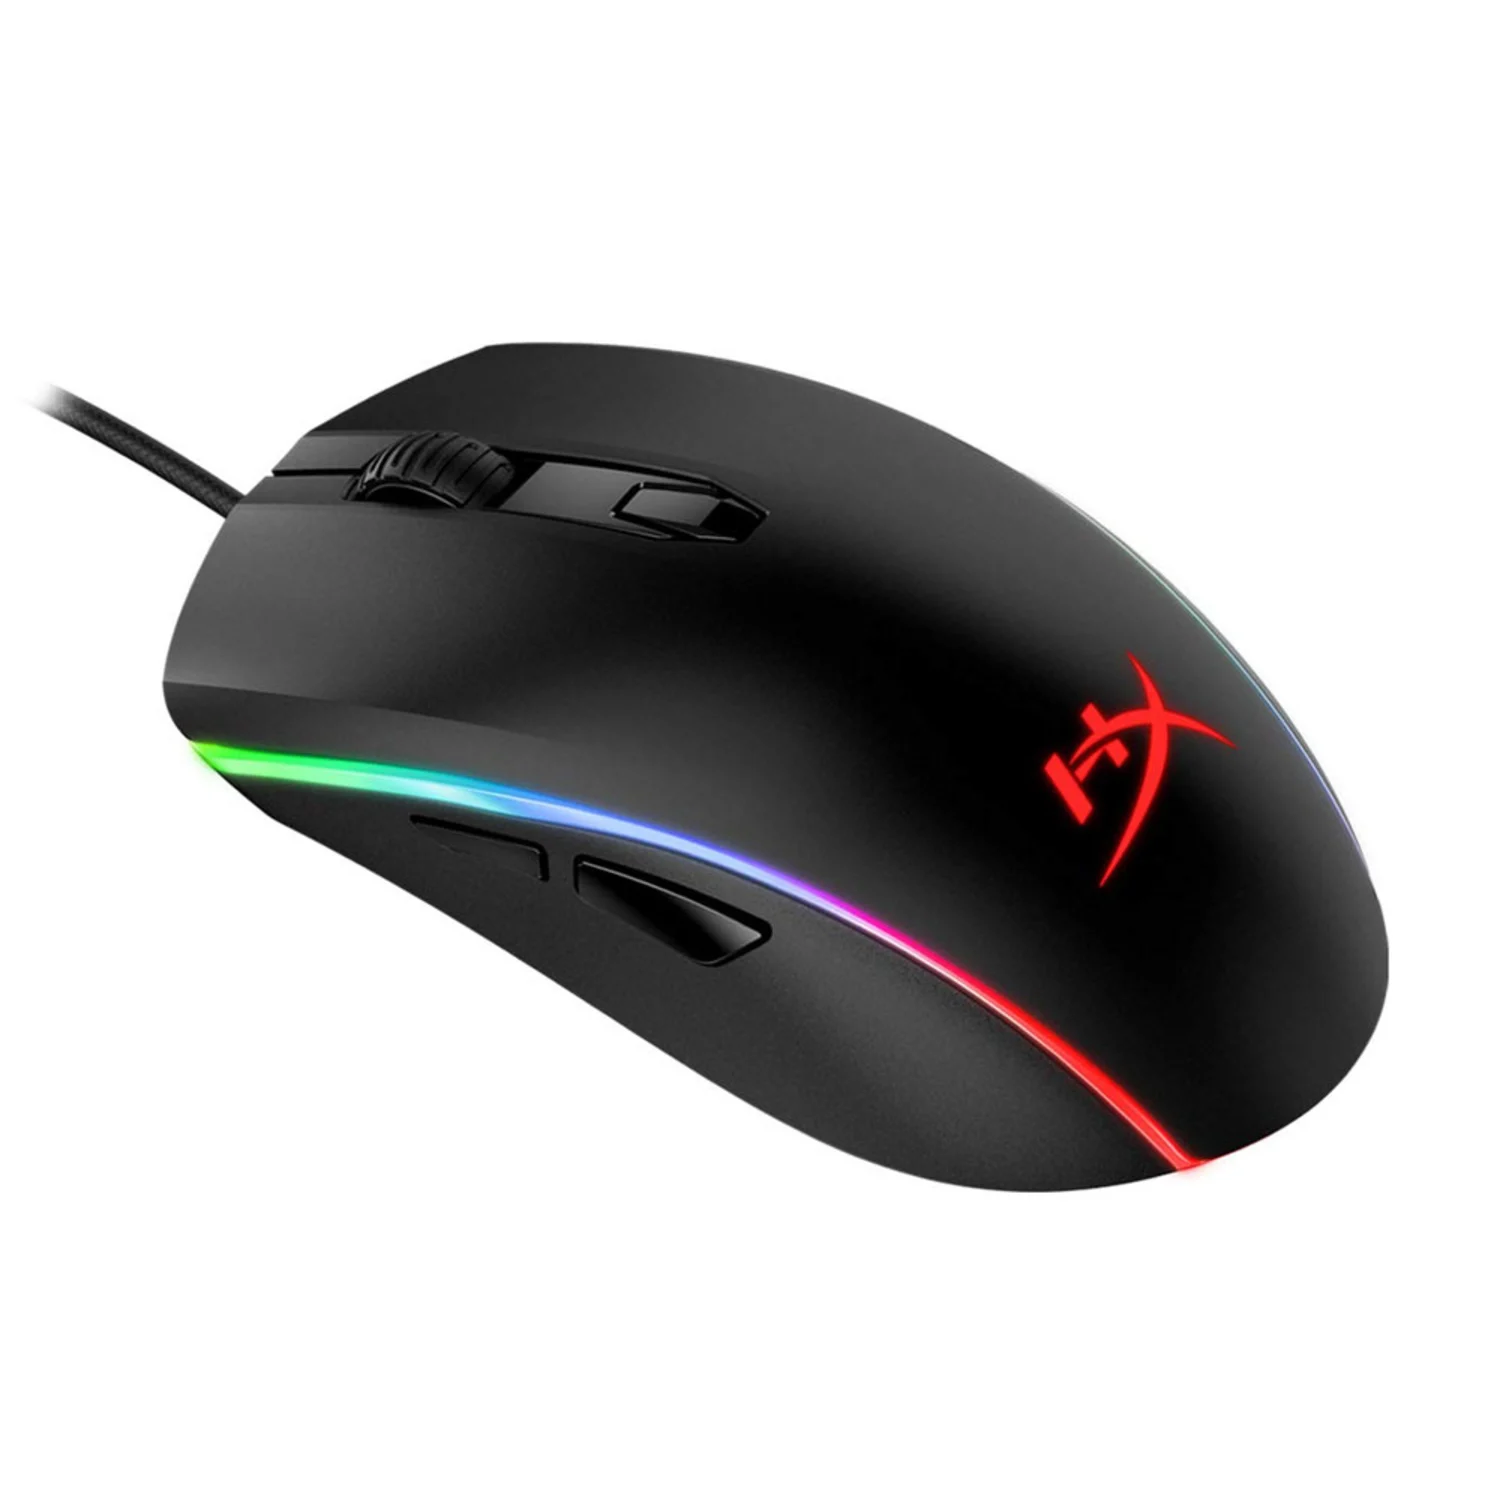 Mouse Kingston Hyper X Pulsefire Surge RGB - Preto (HX-MC002B)